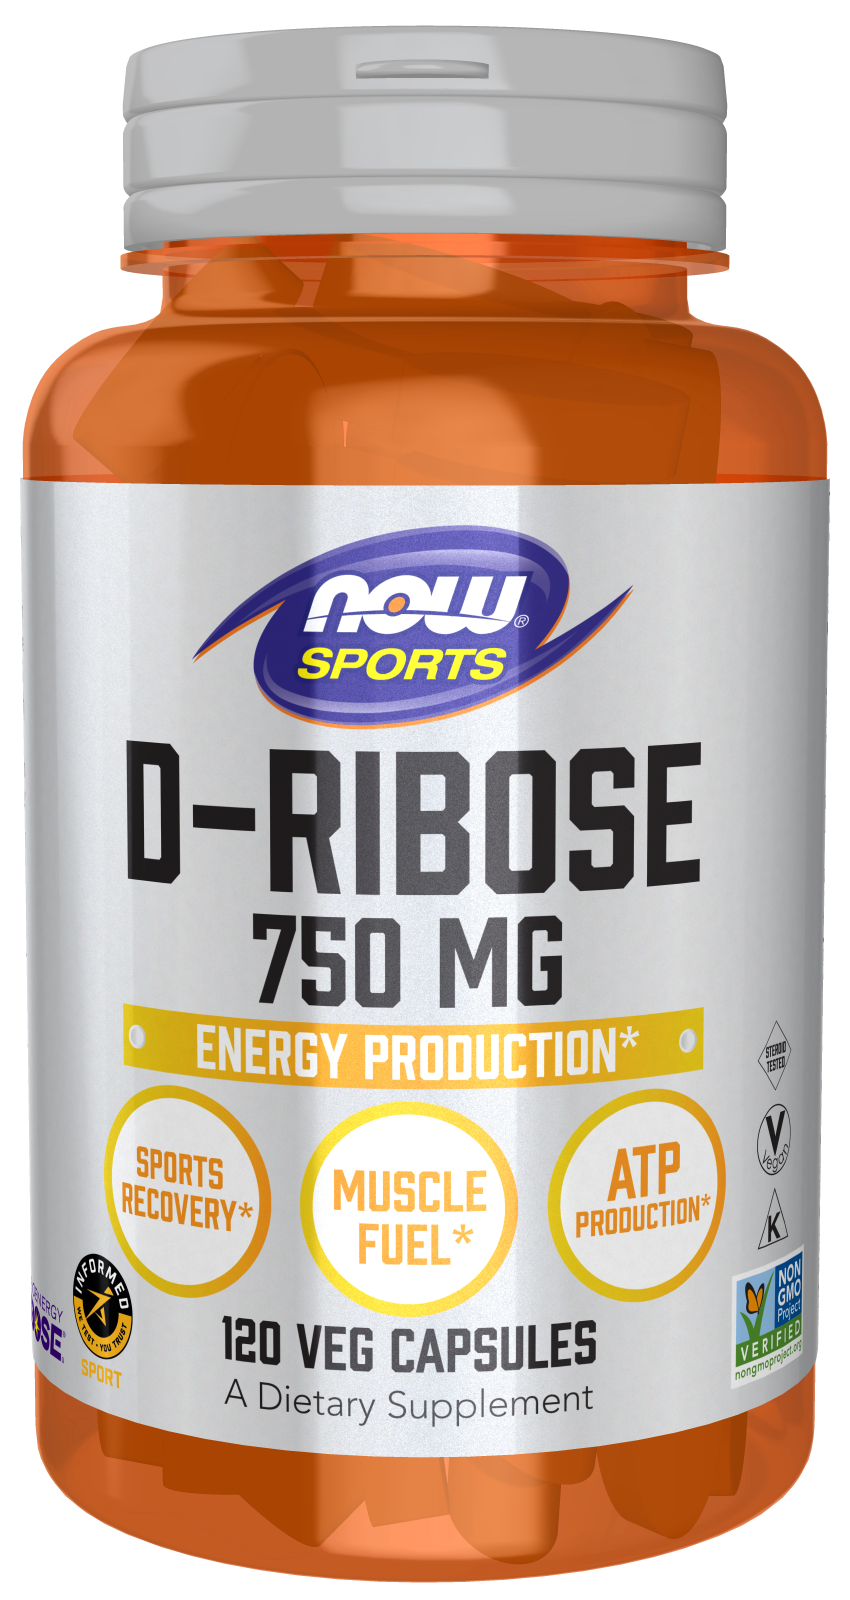 D-Ribose 750 mg - 120 Veg Capsules Bottle Front